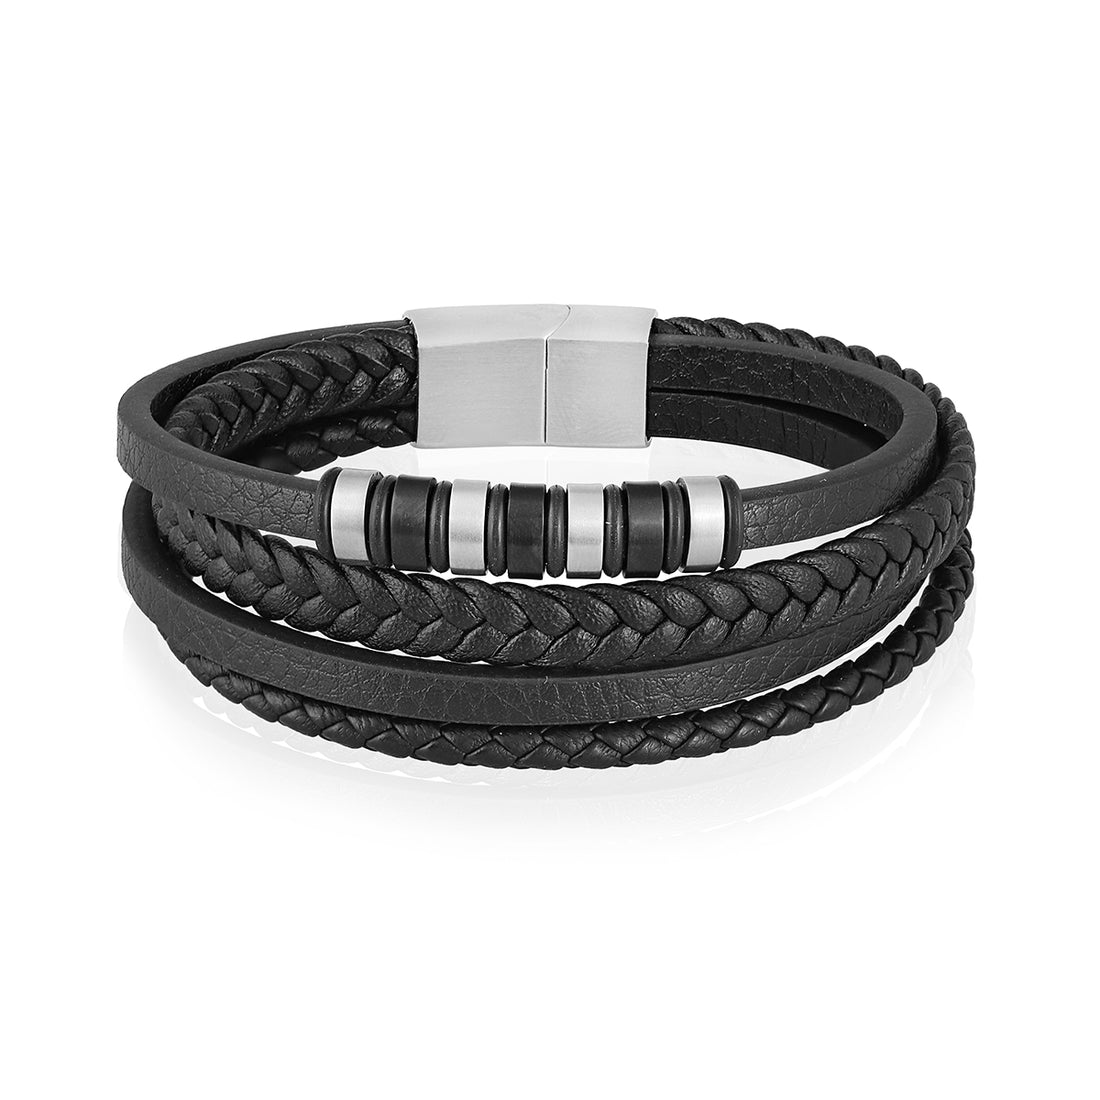 Black leather braided multi-layer bracelet